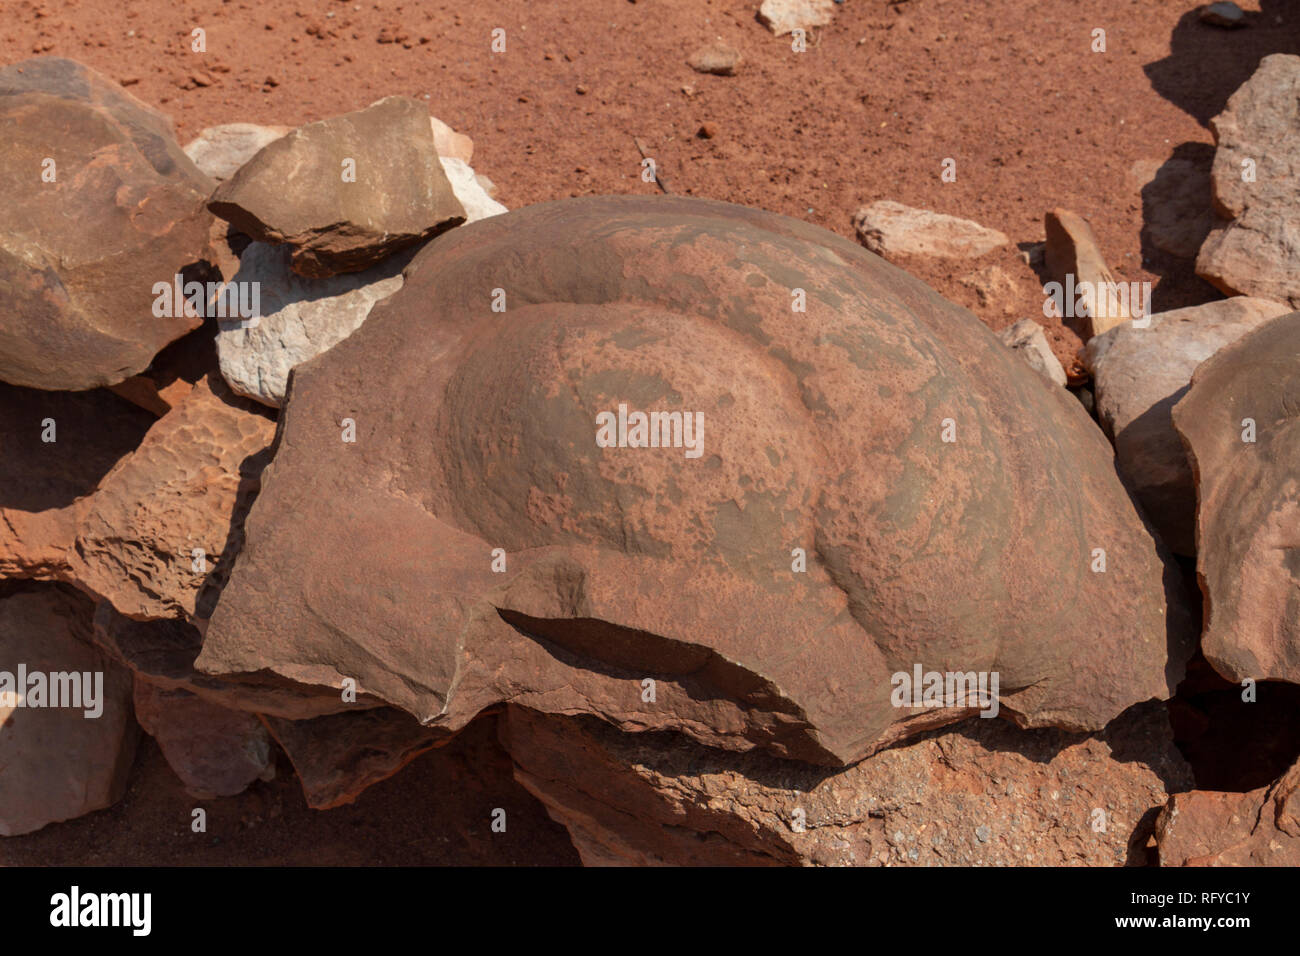 Geological concretions, Moenkopi Dinosaur Tracks site near Tuba City, Arizona, United States. Stock Photo